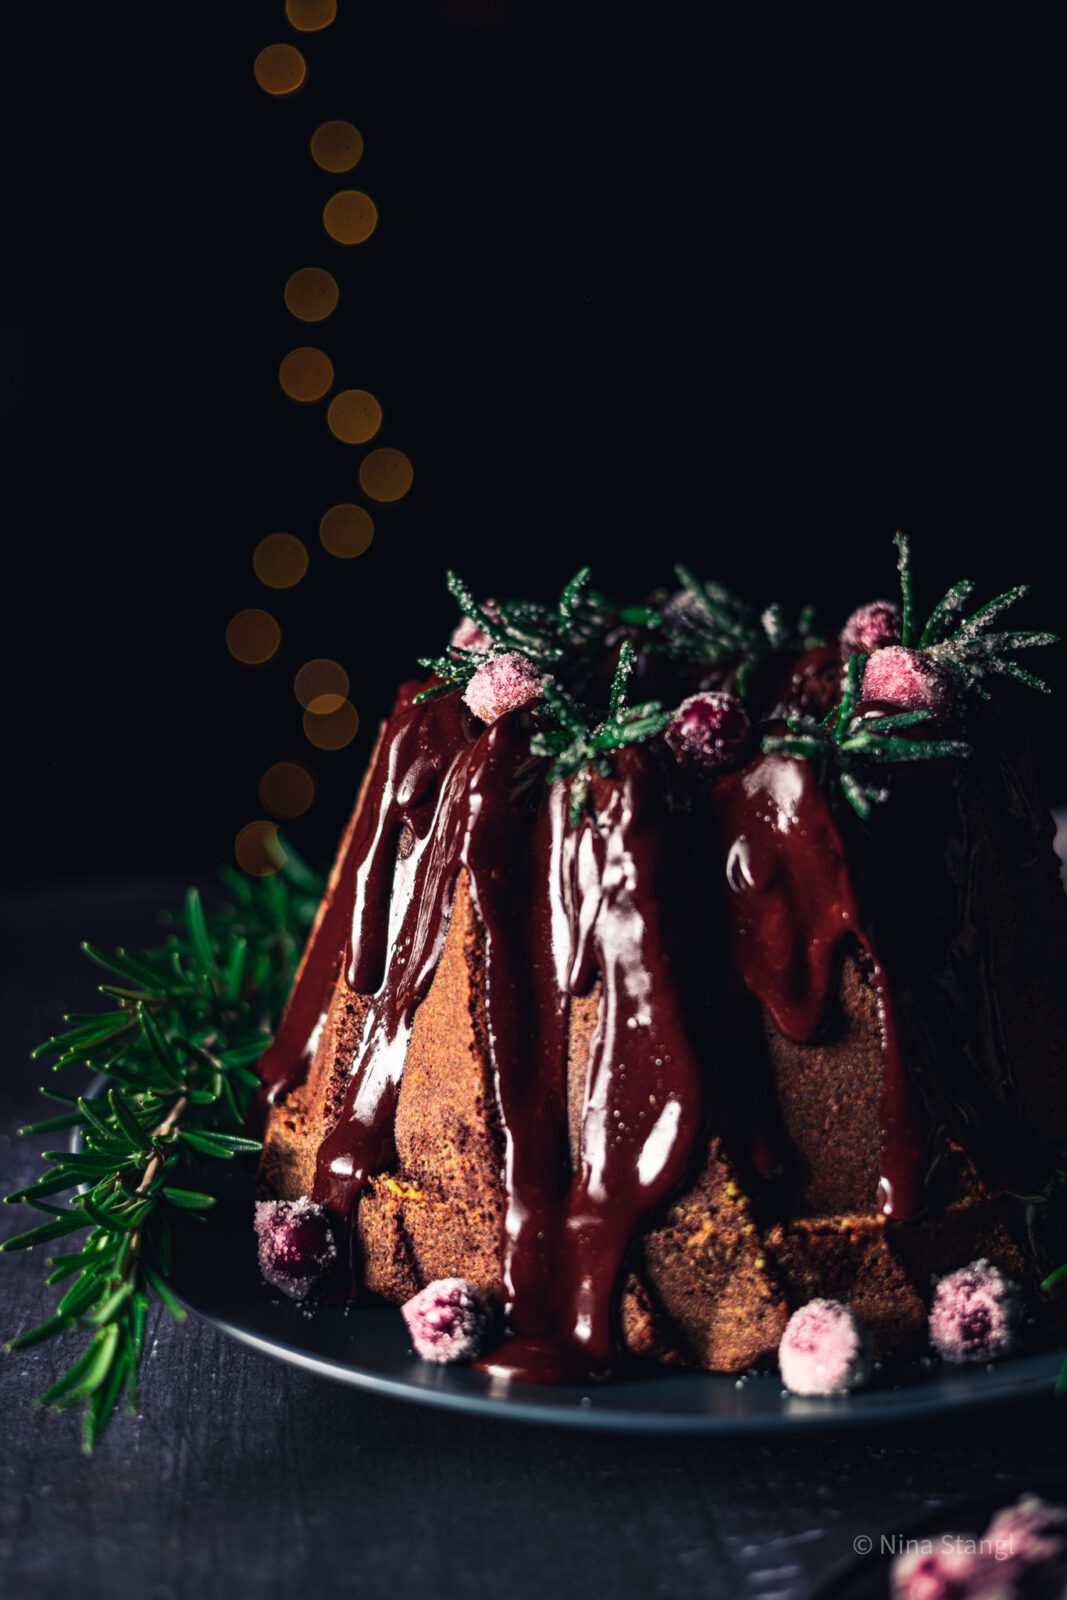 Moist red wine chocolate spice bundt cake with Lebkuchen chocolate glaze